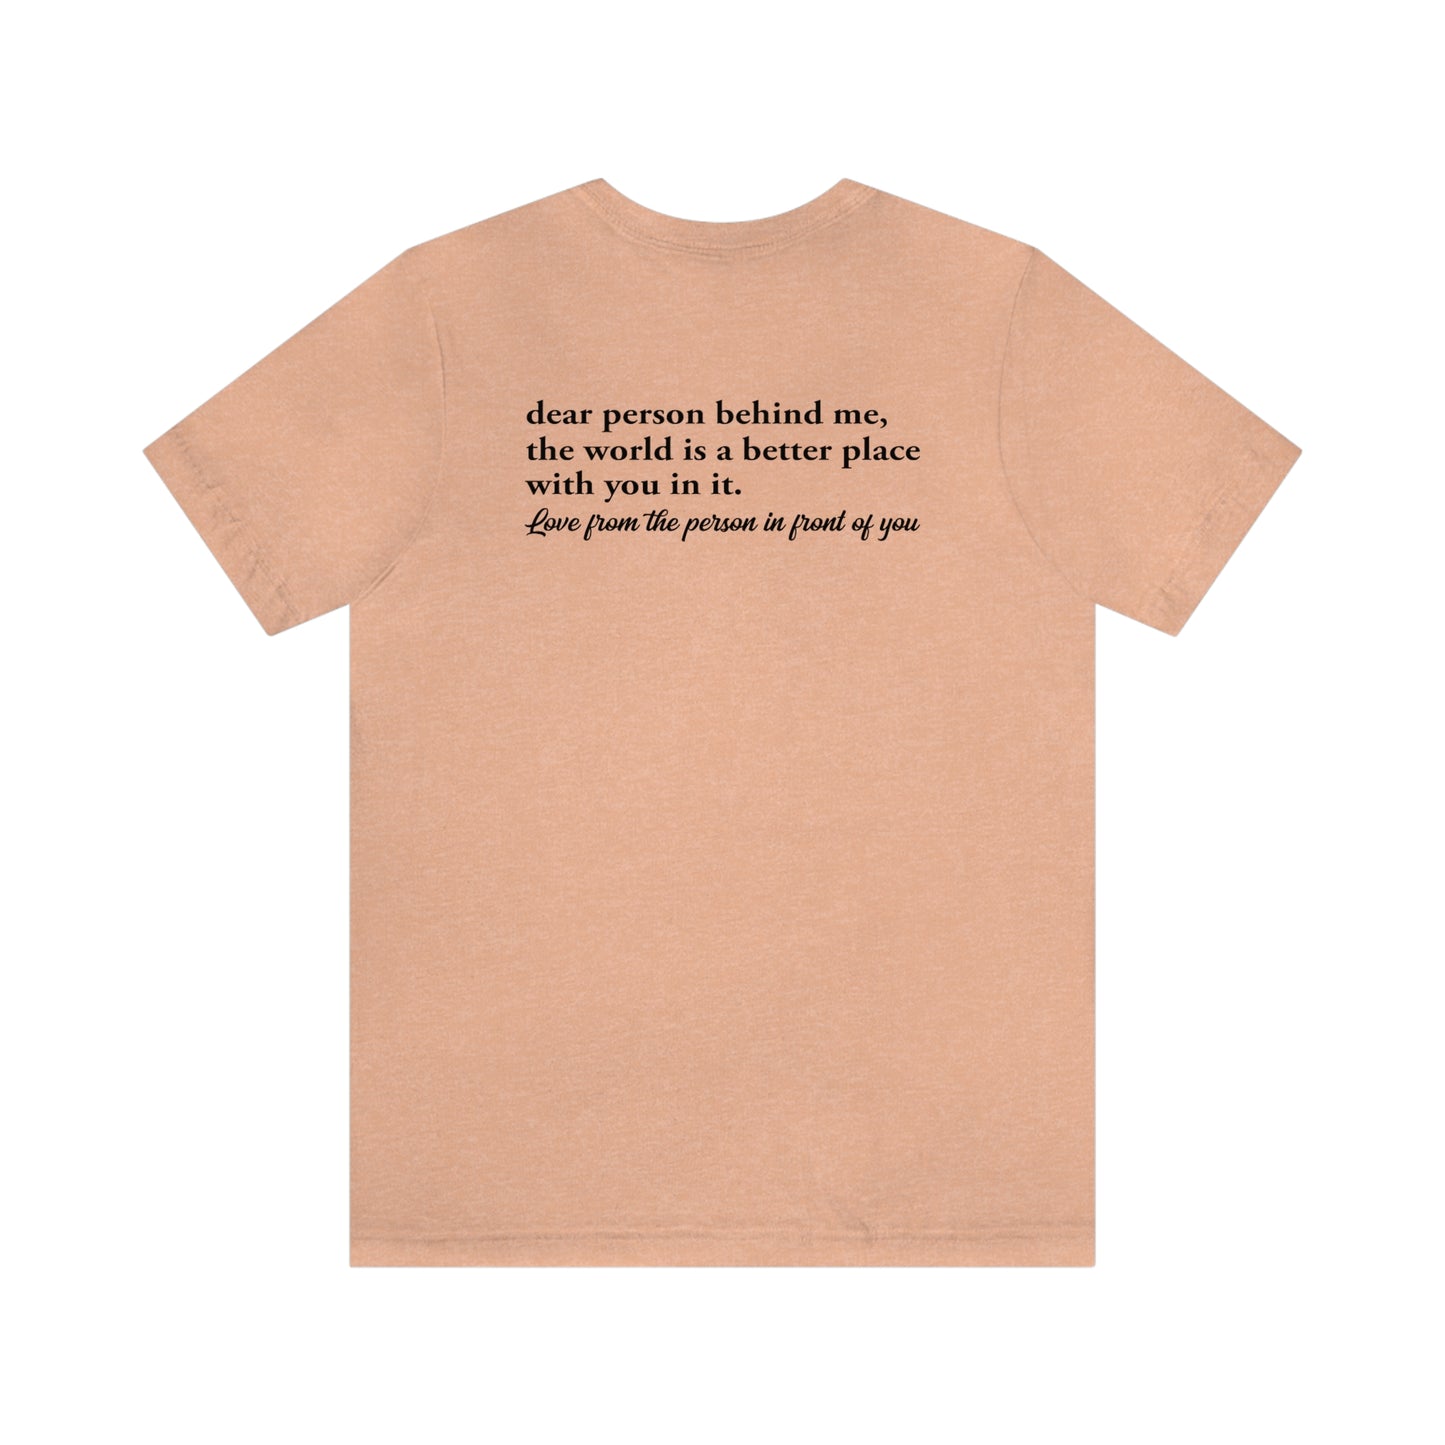 Dear Person Behind Me Shirt - Personalised Mental Health Awareness T-Shirt, Positivity Shirt, Kindness Shirt